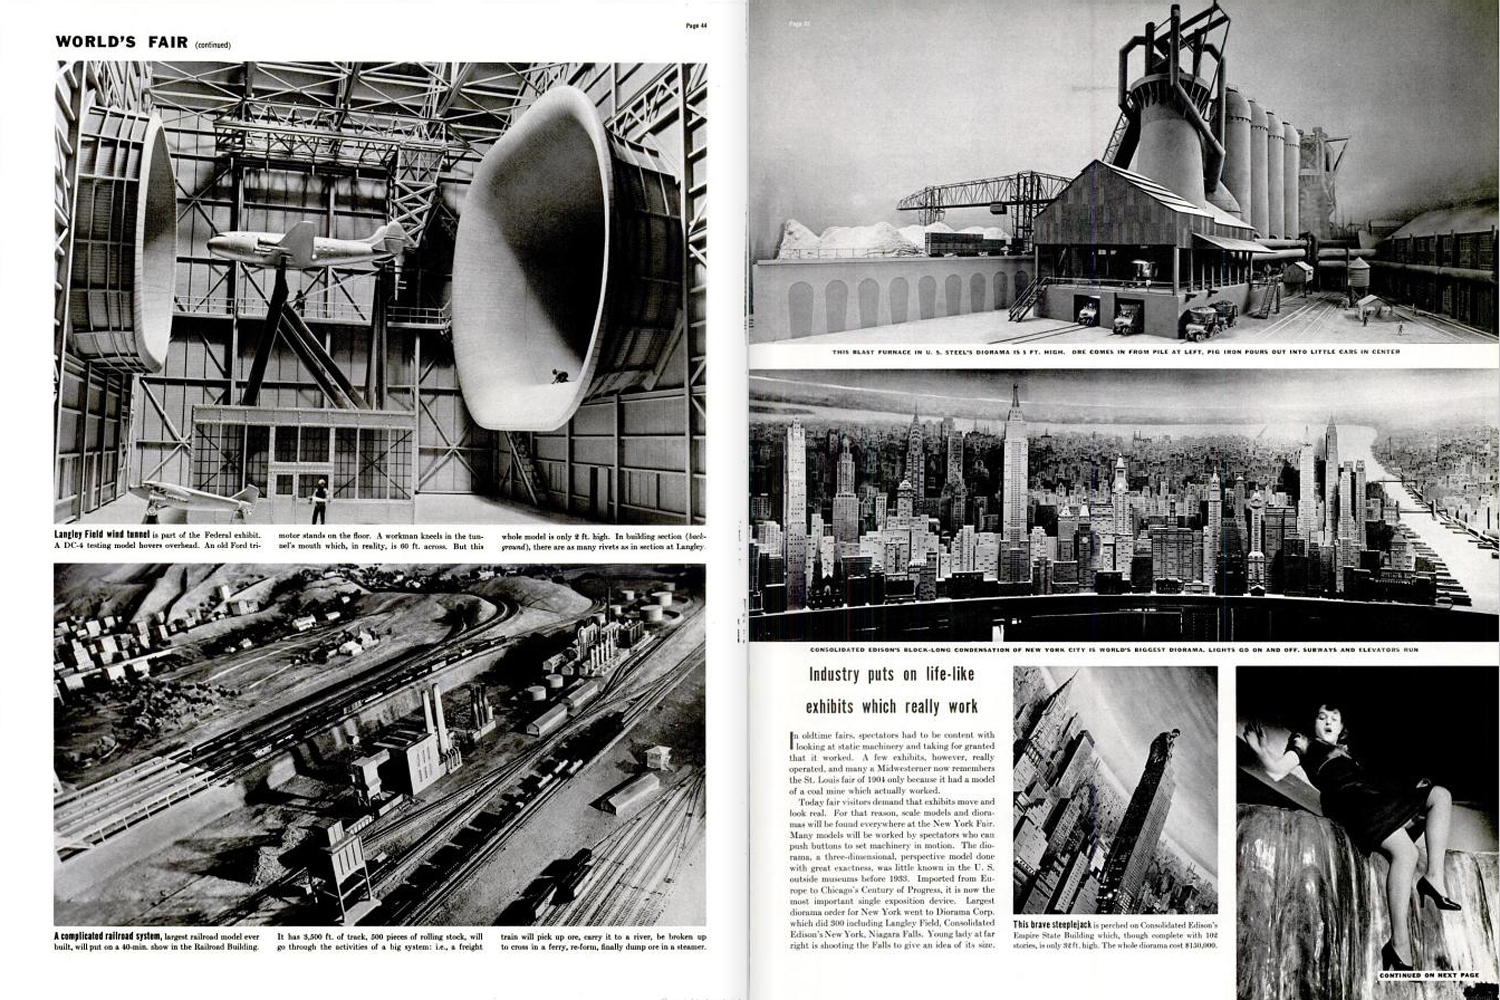 LIFE magazine feature on the 1939 New York World's Fair.